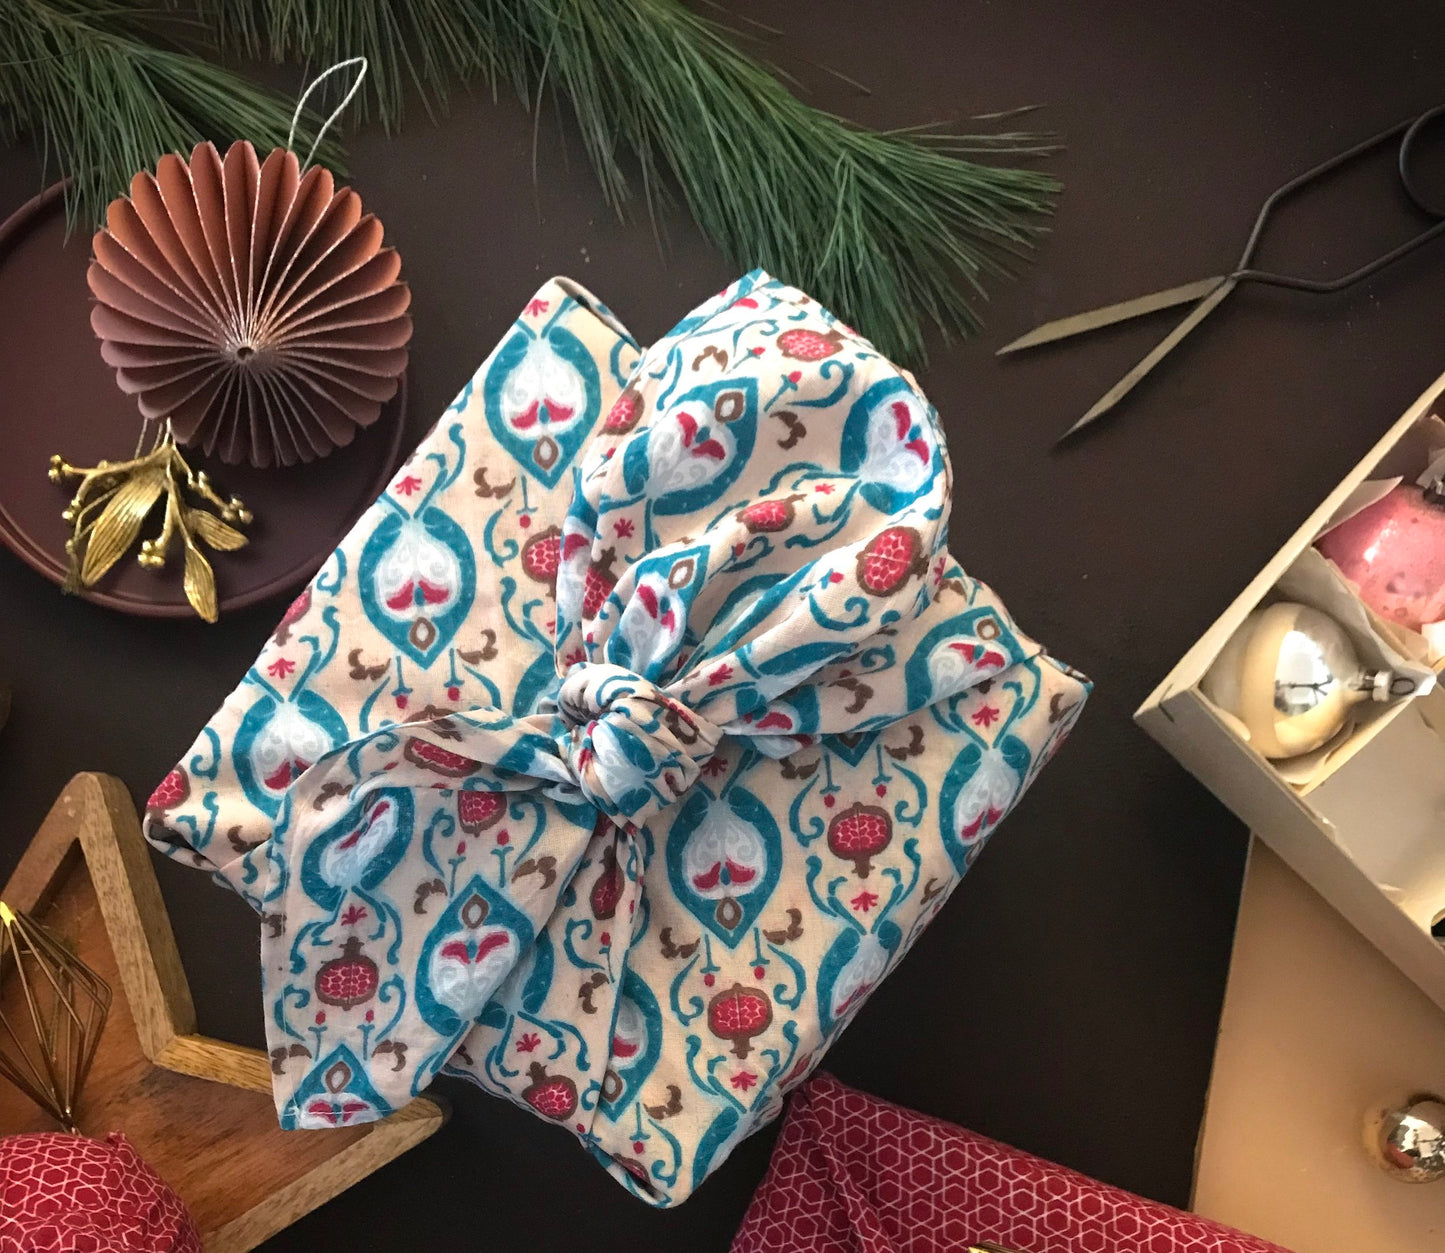 Teal Fabric Gift Wrap Furoshiki Cloth - Single Sided